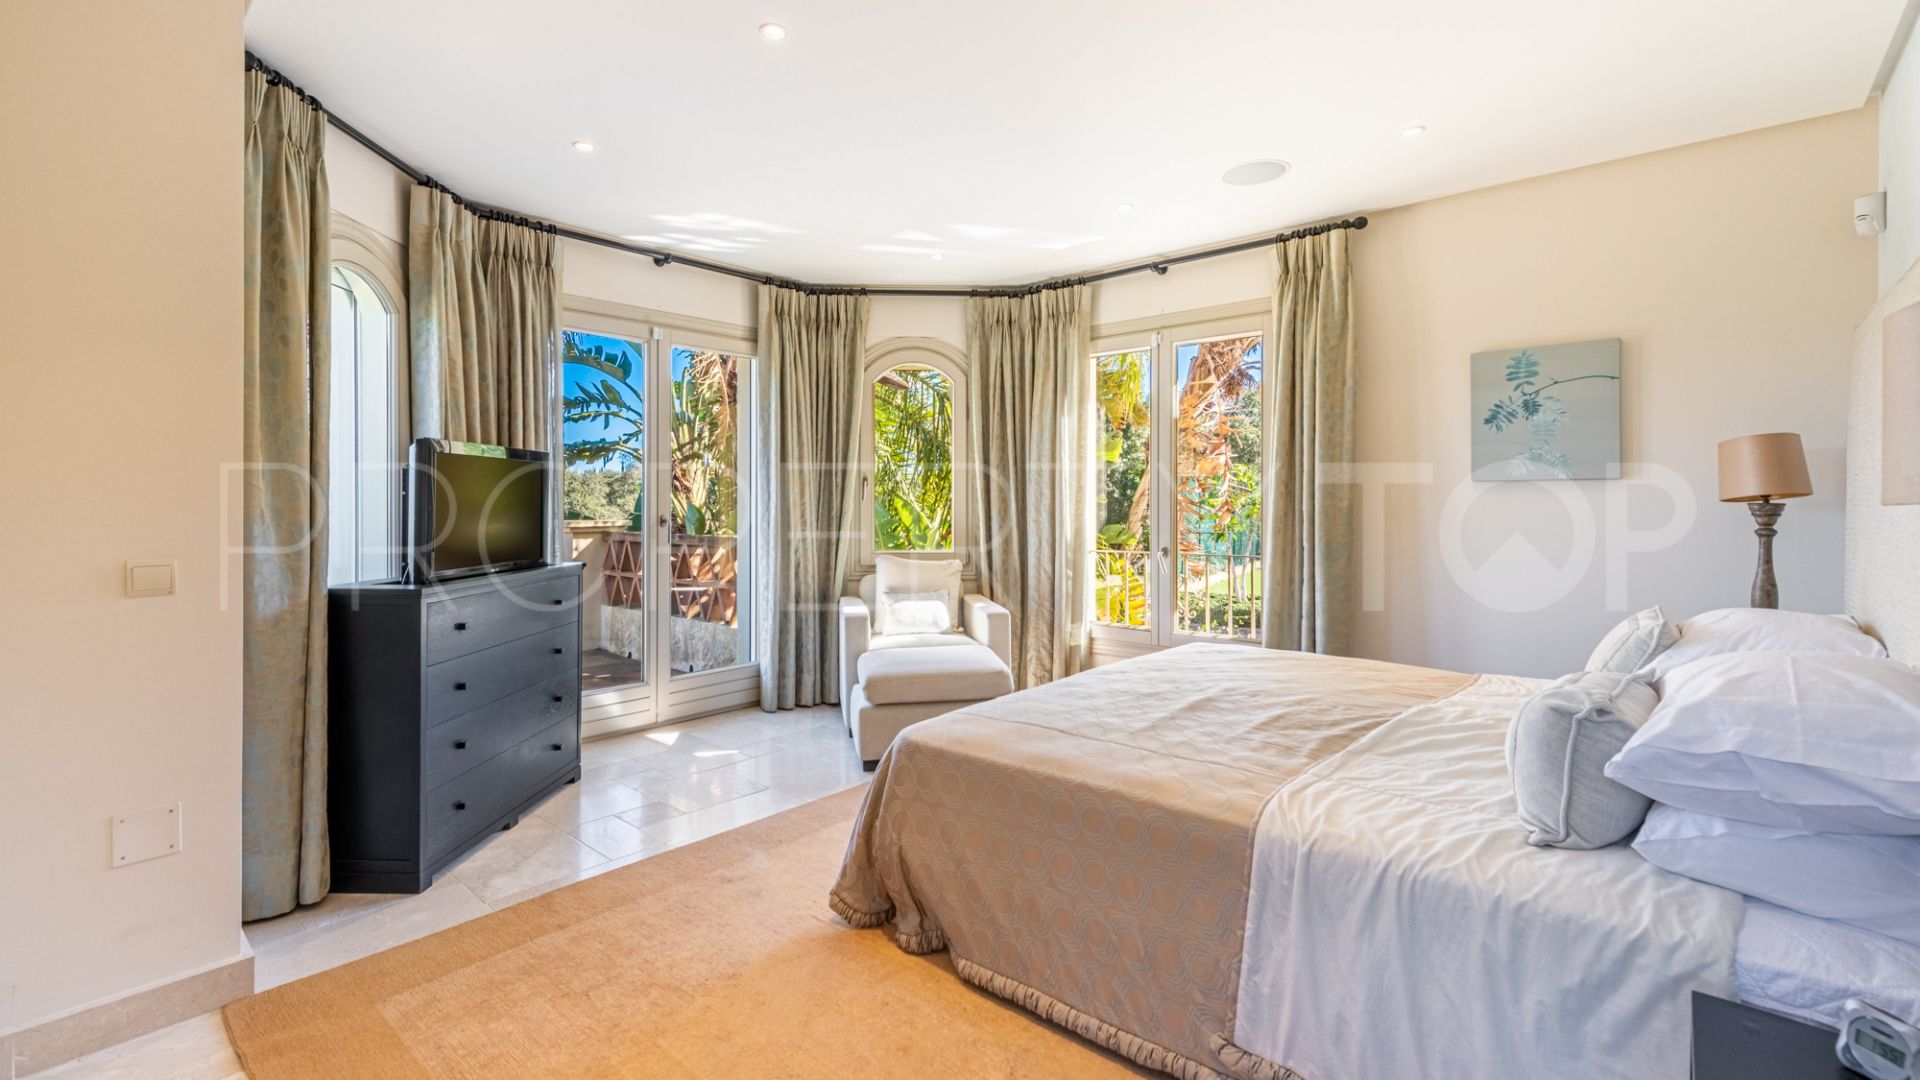 6 bedrooms villa in Sotogrande Alto Central for sale